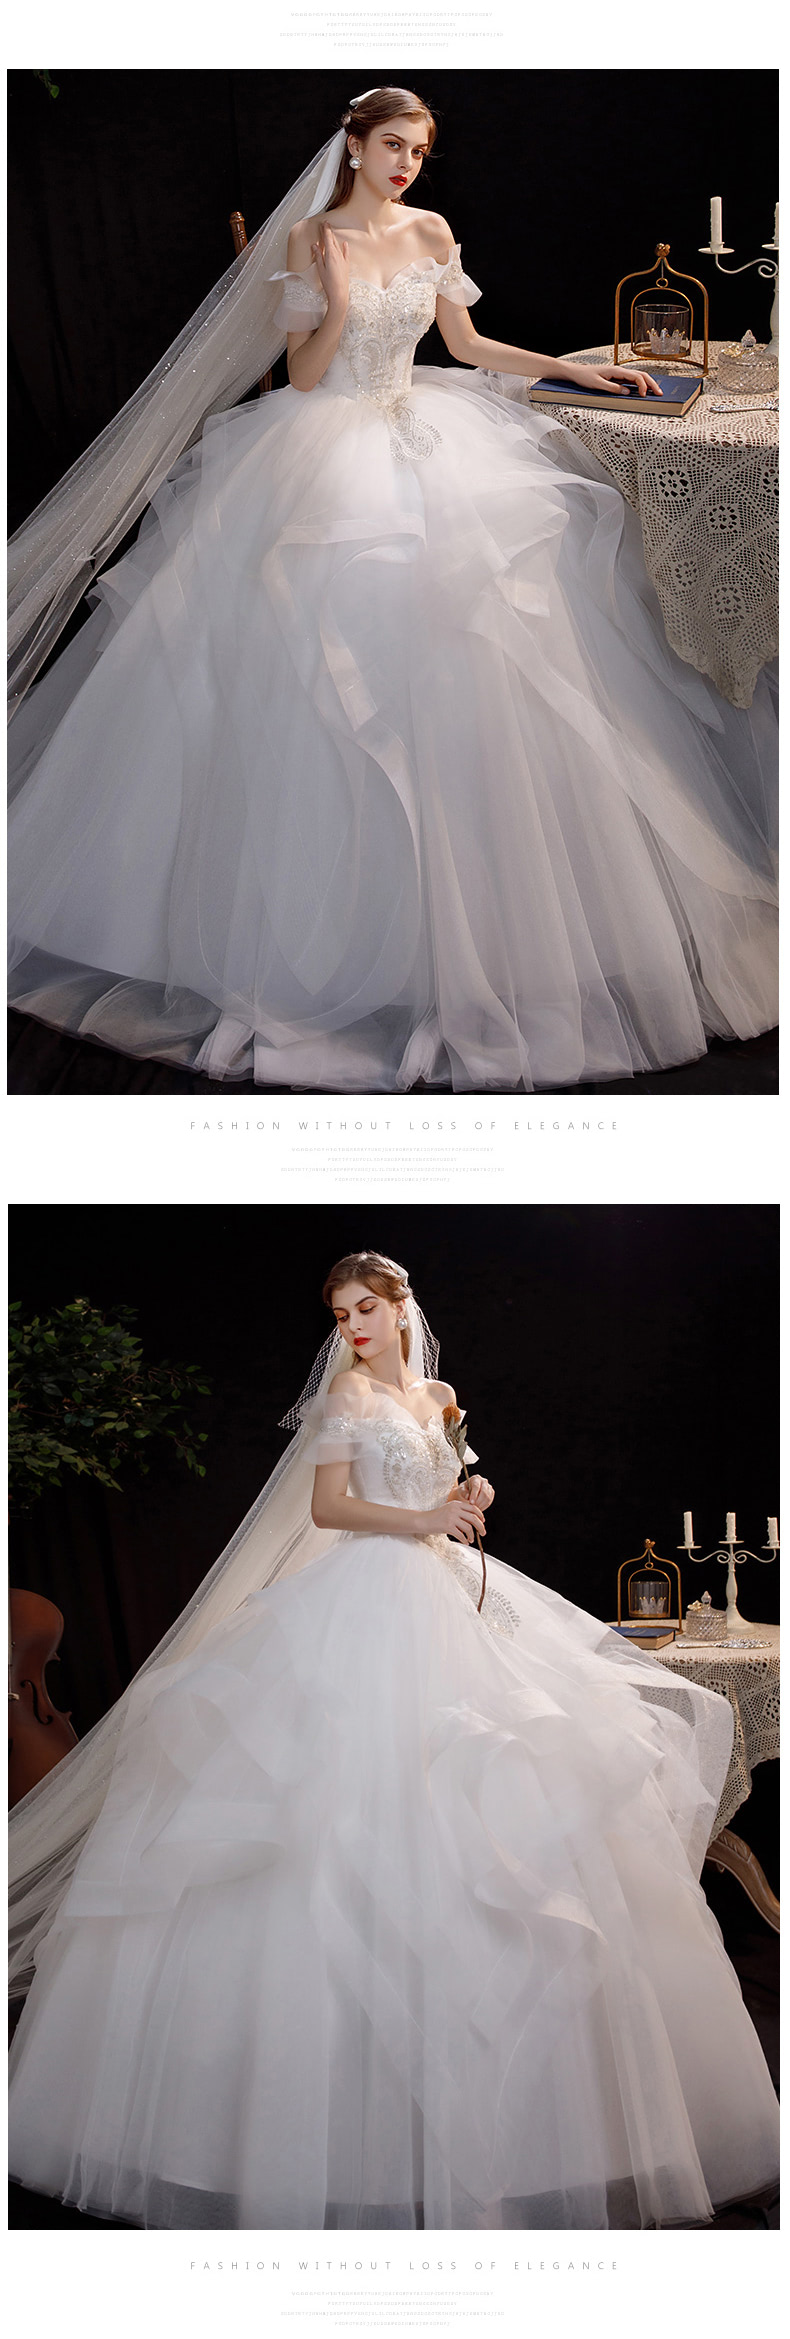 Simple-Off-Shoulder-High-Waist-Lace-White-Wedding-Dress13.jpg